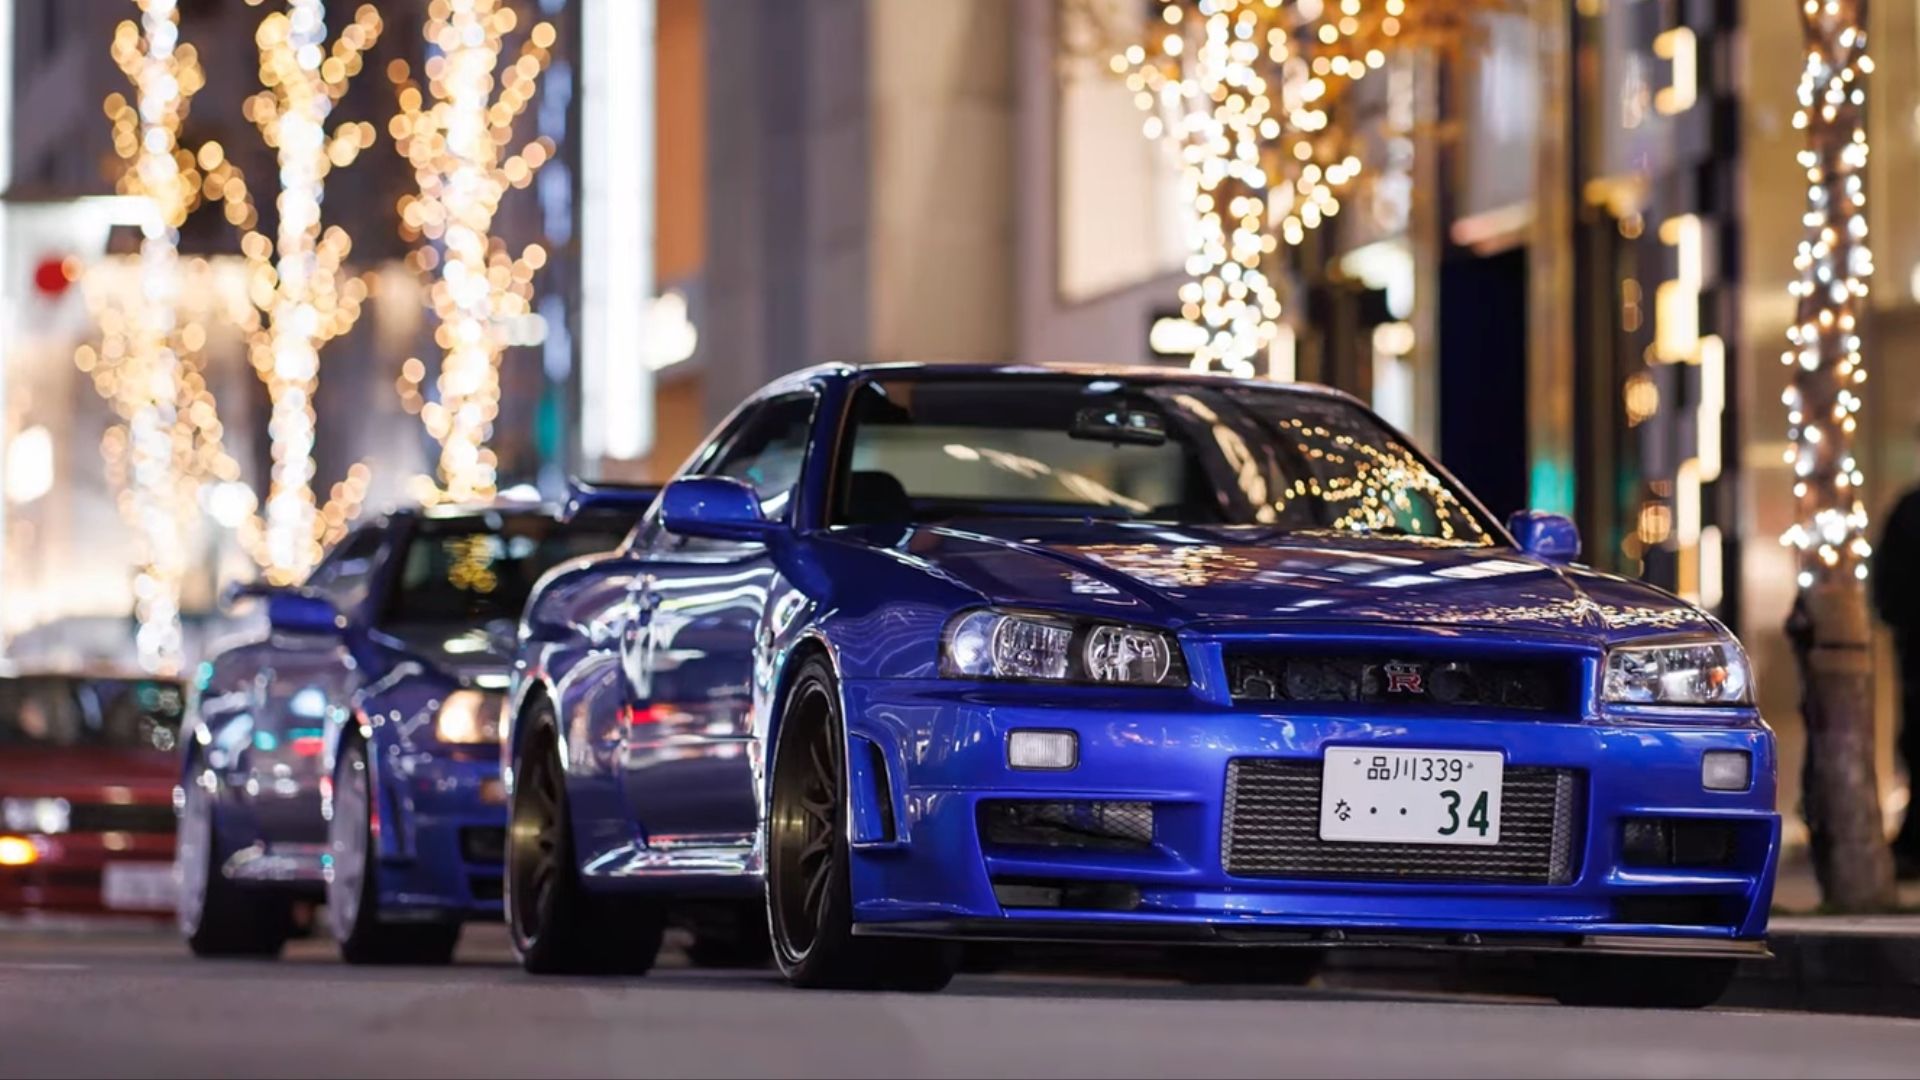 Japanese Dealer Holds Incredible R34 Nissan Skyline GT-R Worth $1.5 Million